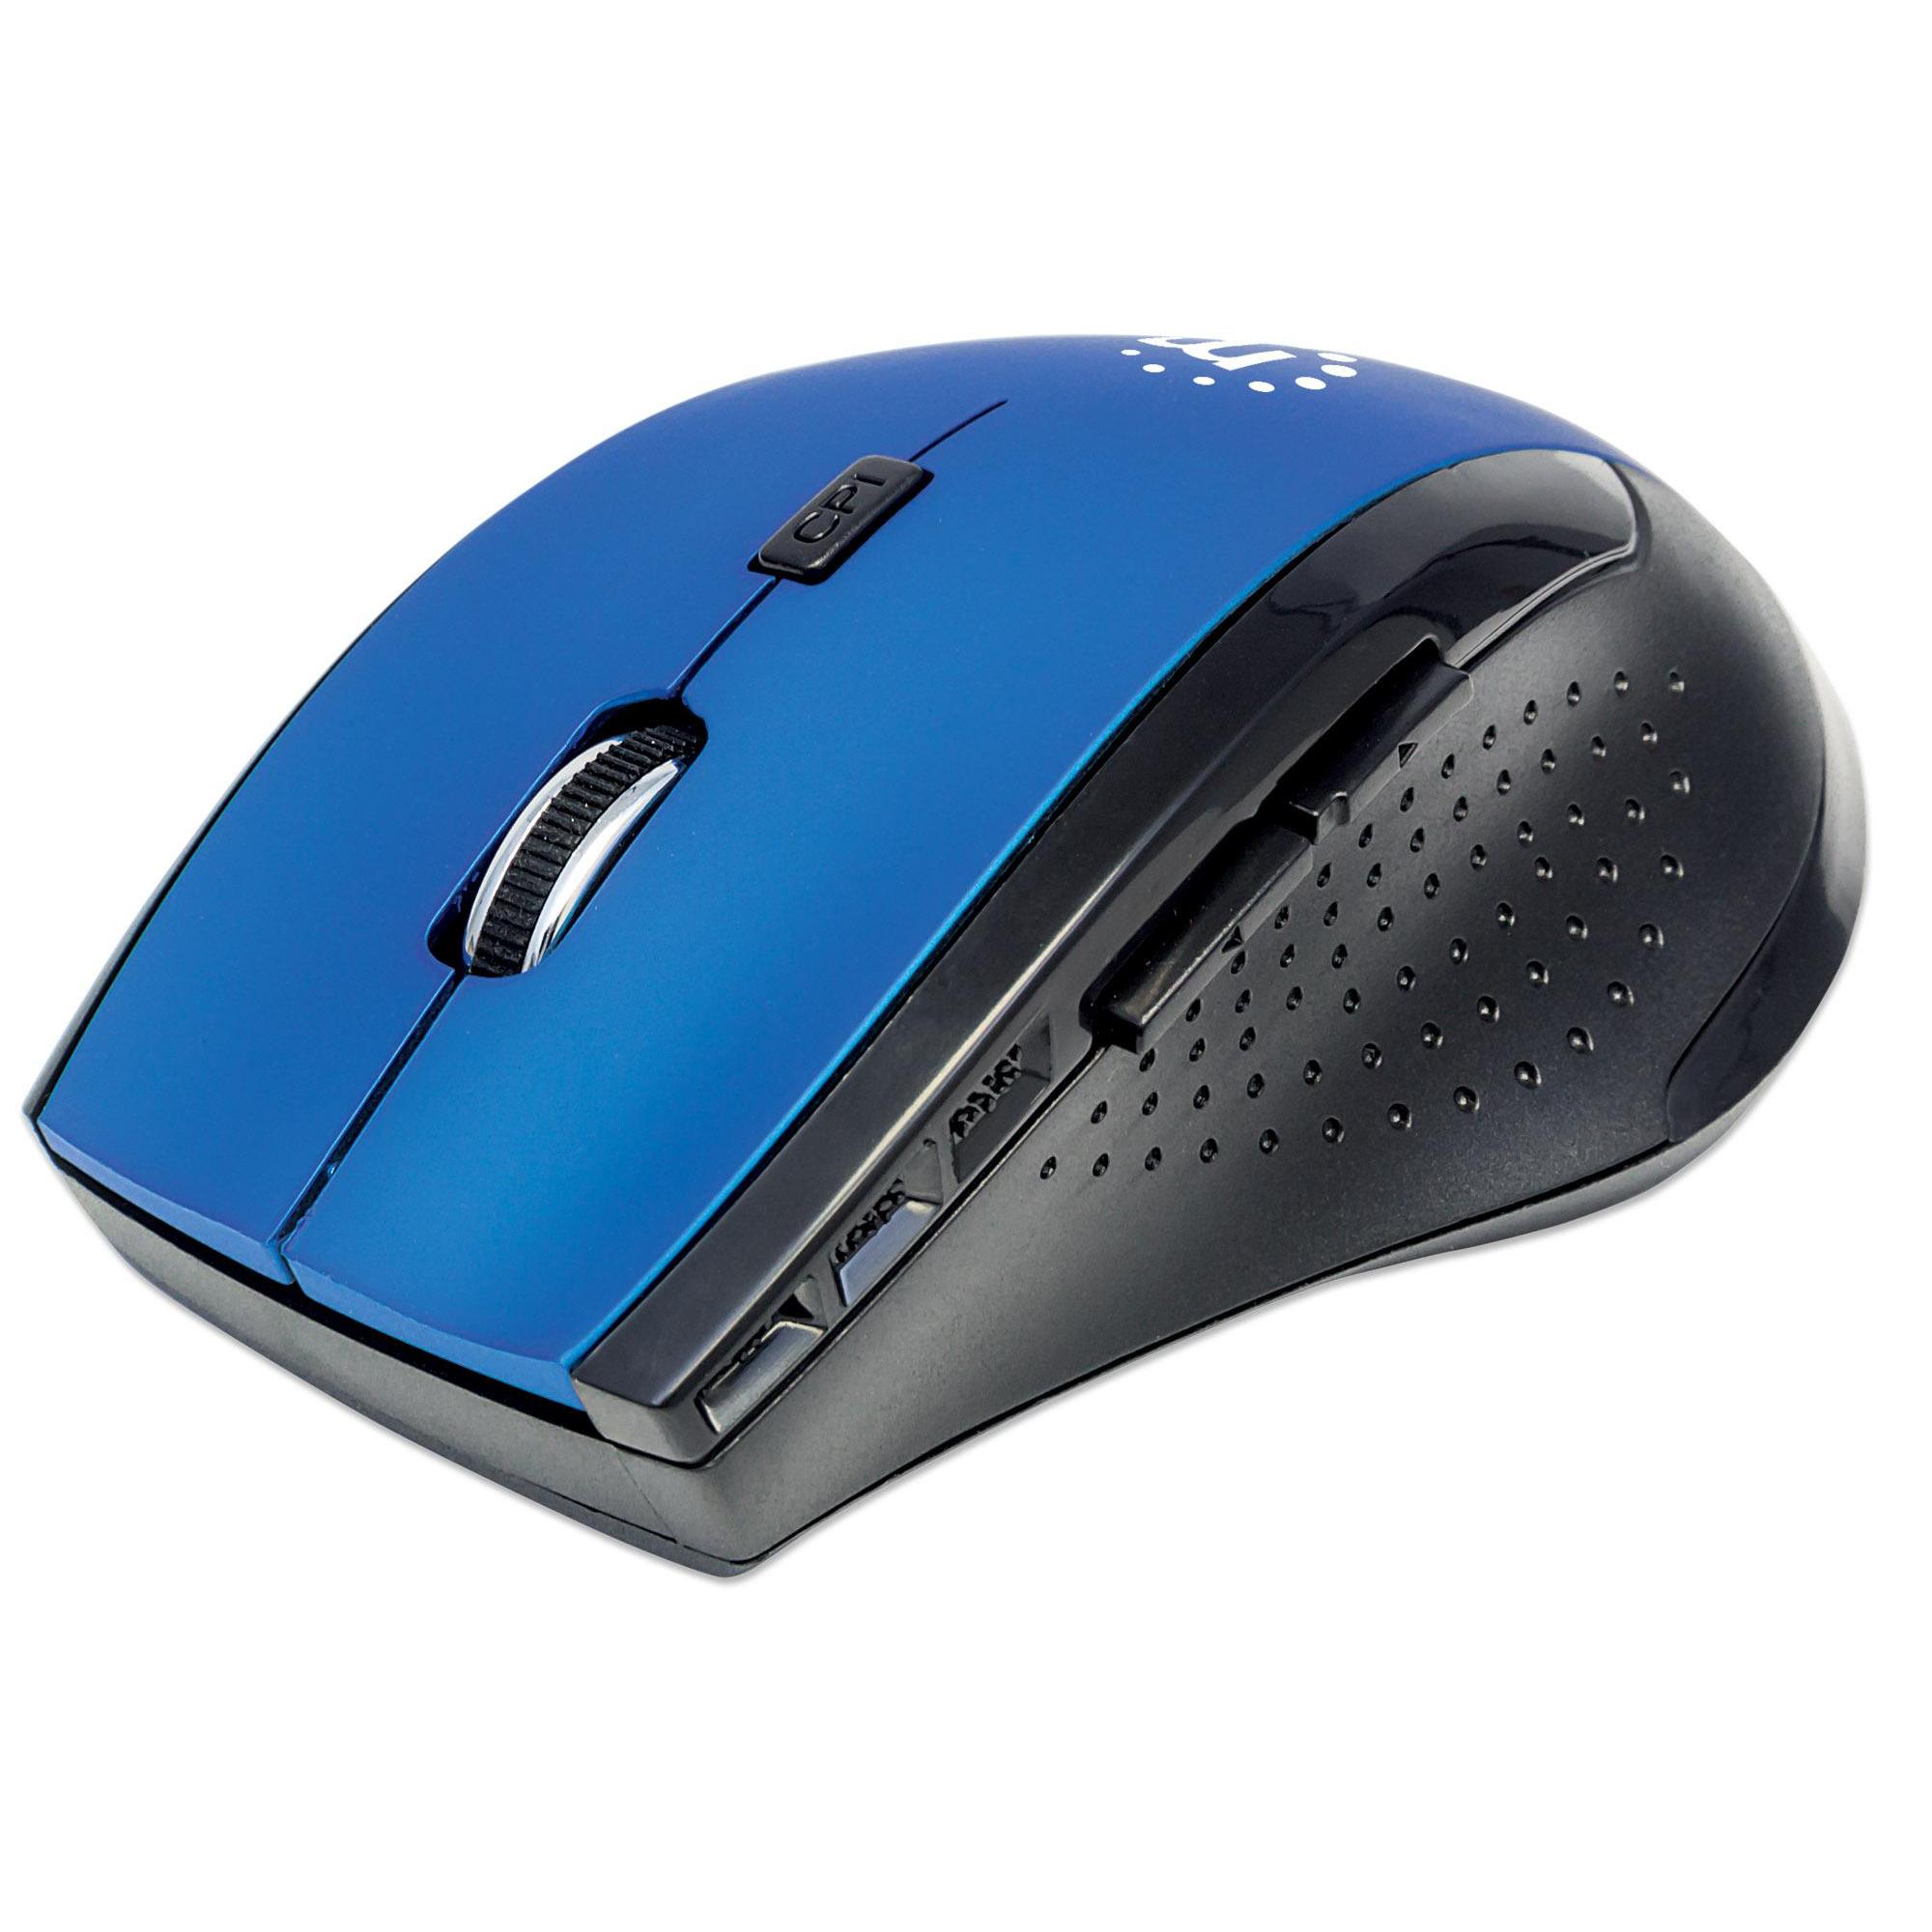 Mouse Ottico Wireless Curve 1600dpi, Blu